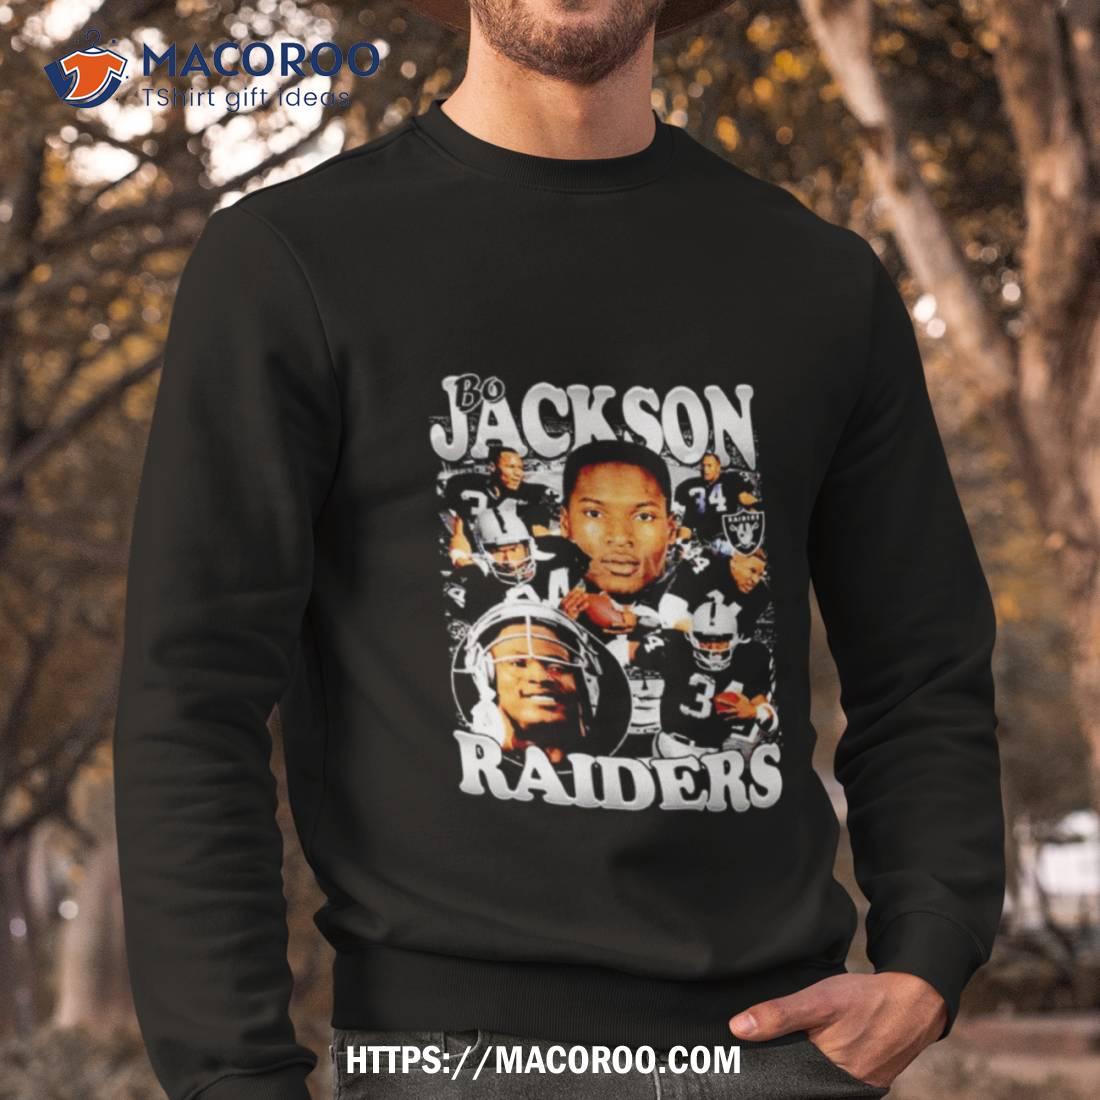 Bo Jackson T-Shirts for Sale